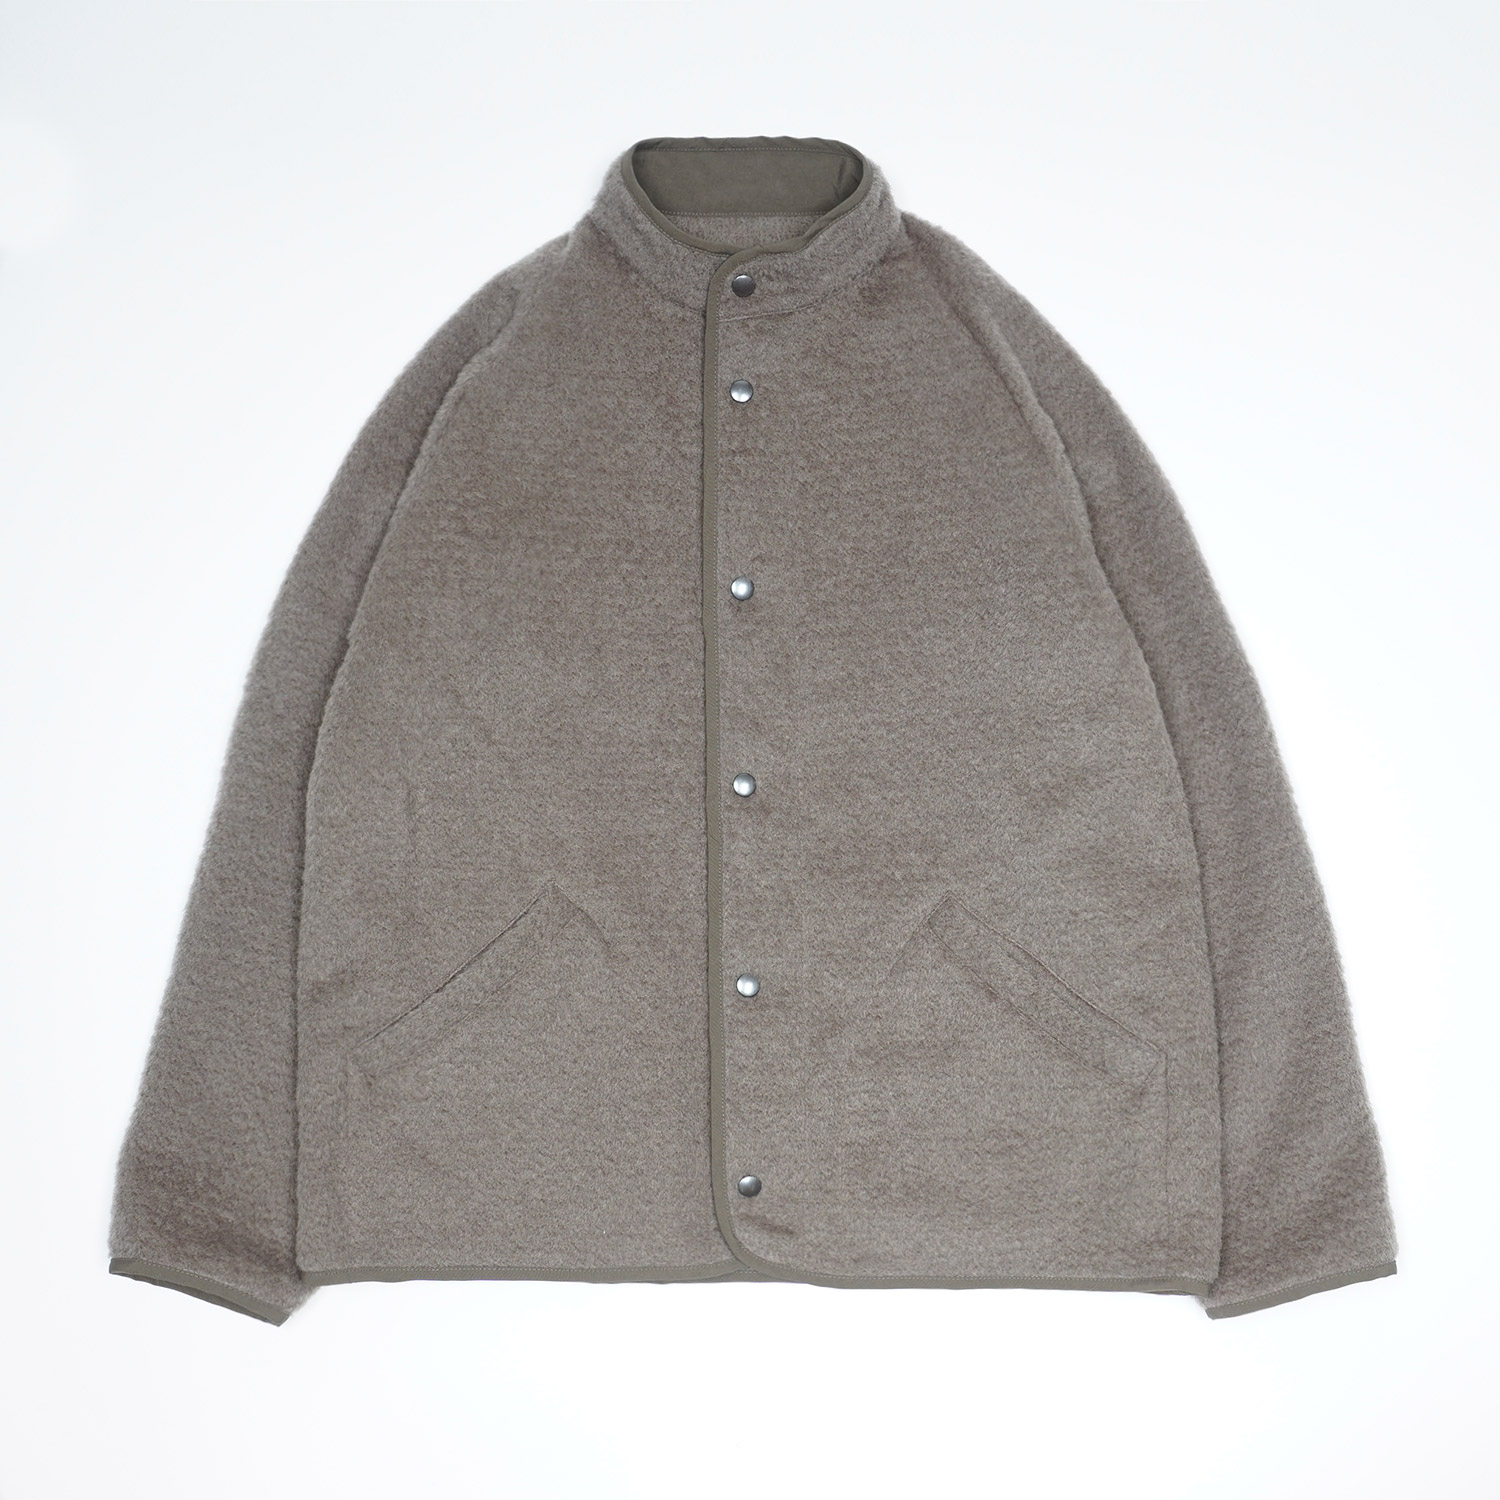 CONTOUR W Jacket in Warm grey color by Arpenteur